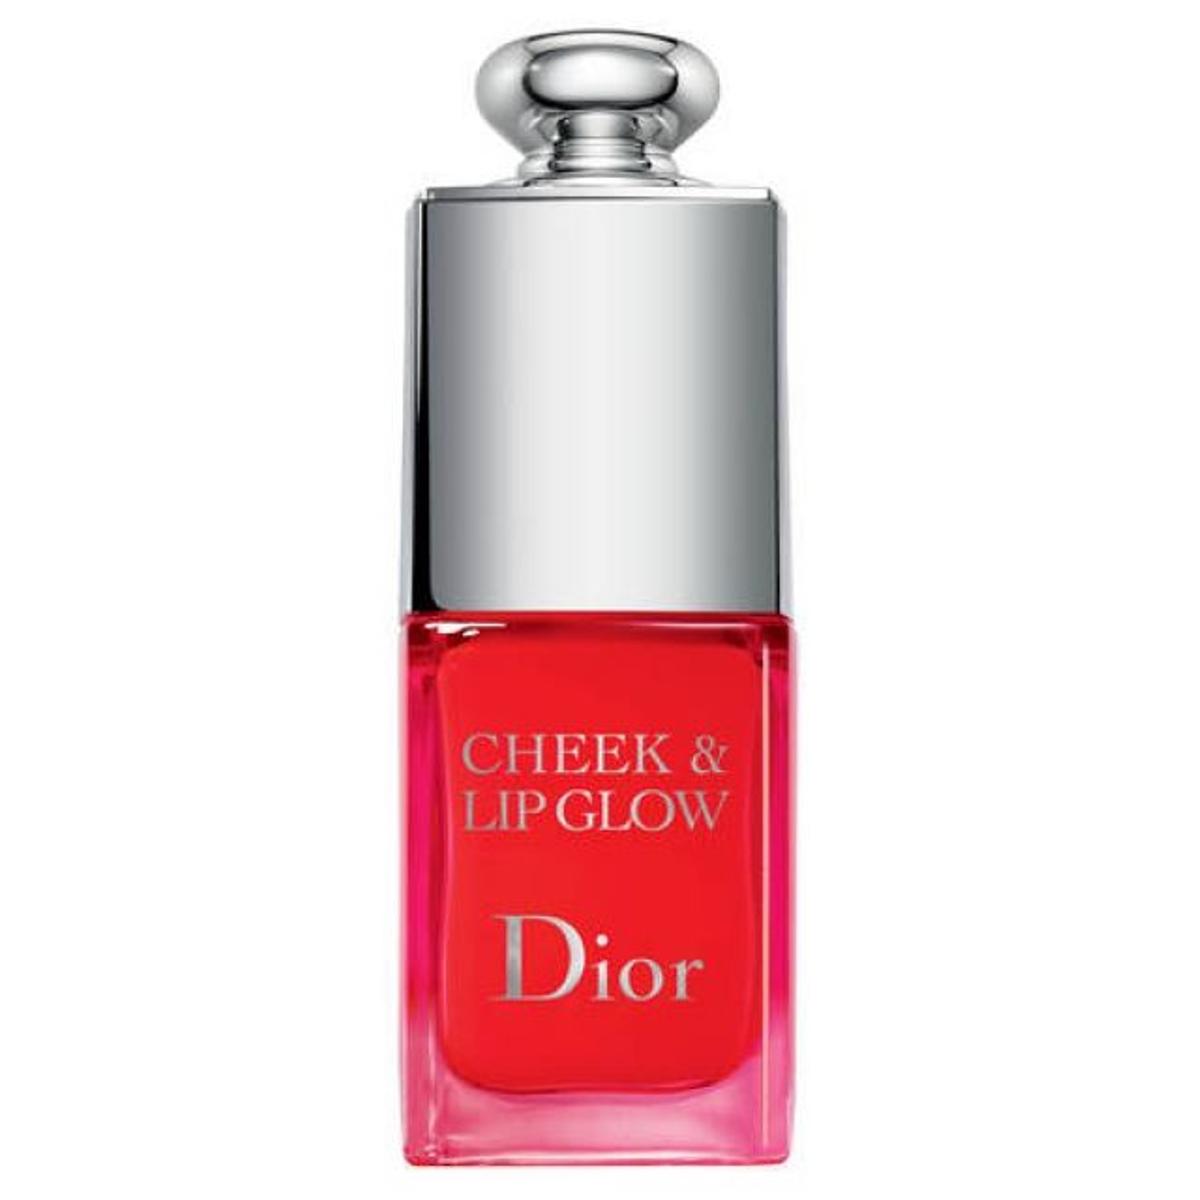 Cheek andf Lip Glow, Dior